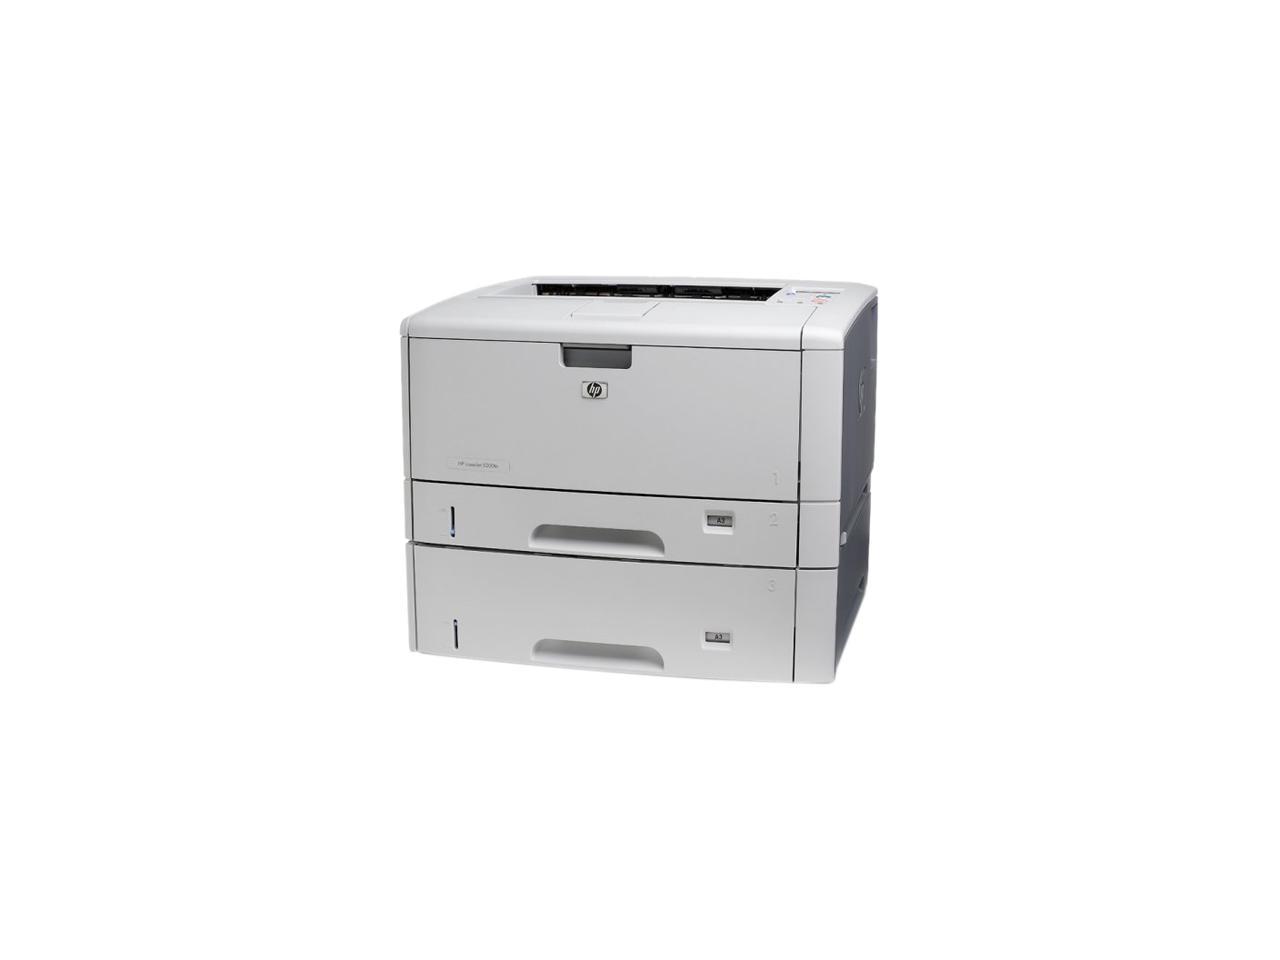 HP LaserJet 5200dtn Personal Monochrome Laser Printer - Newegg.com